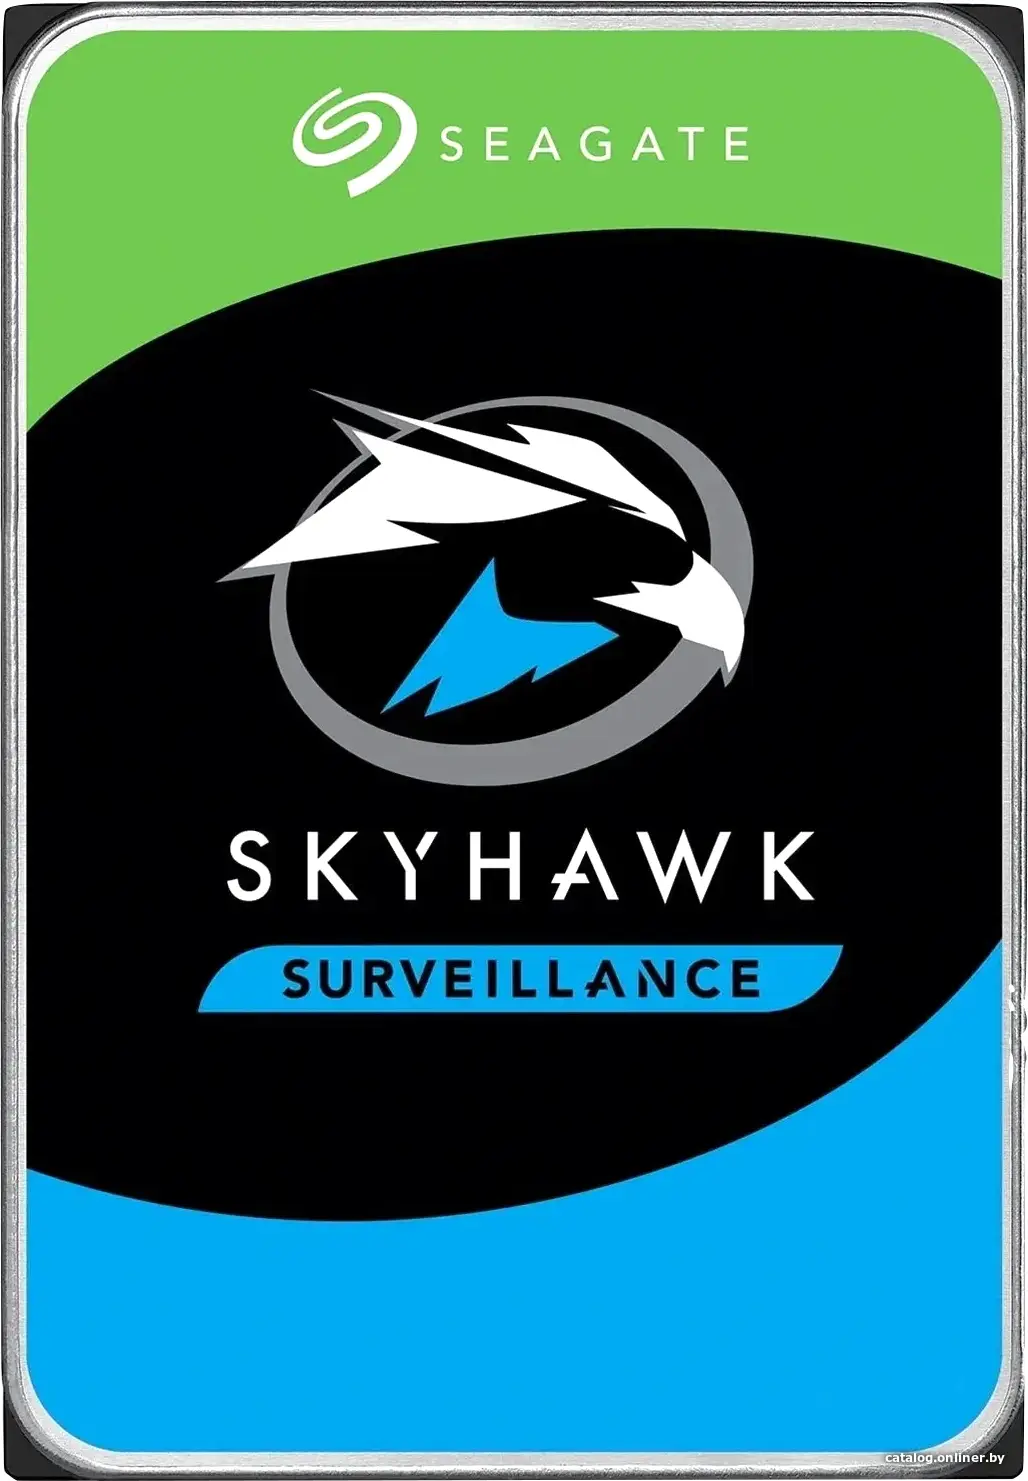 Купить Жесткий диск 4Tb Seagate Video Skyhawk ST4000VX013, цена, опт и розница